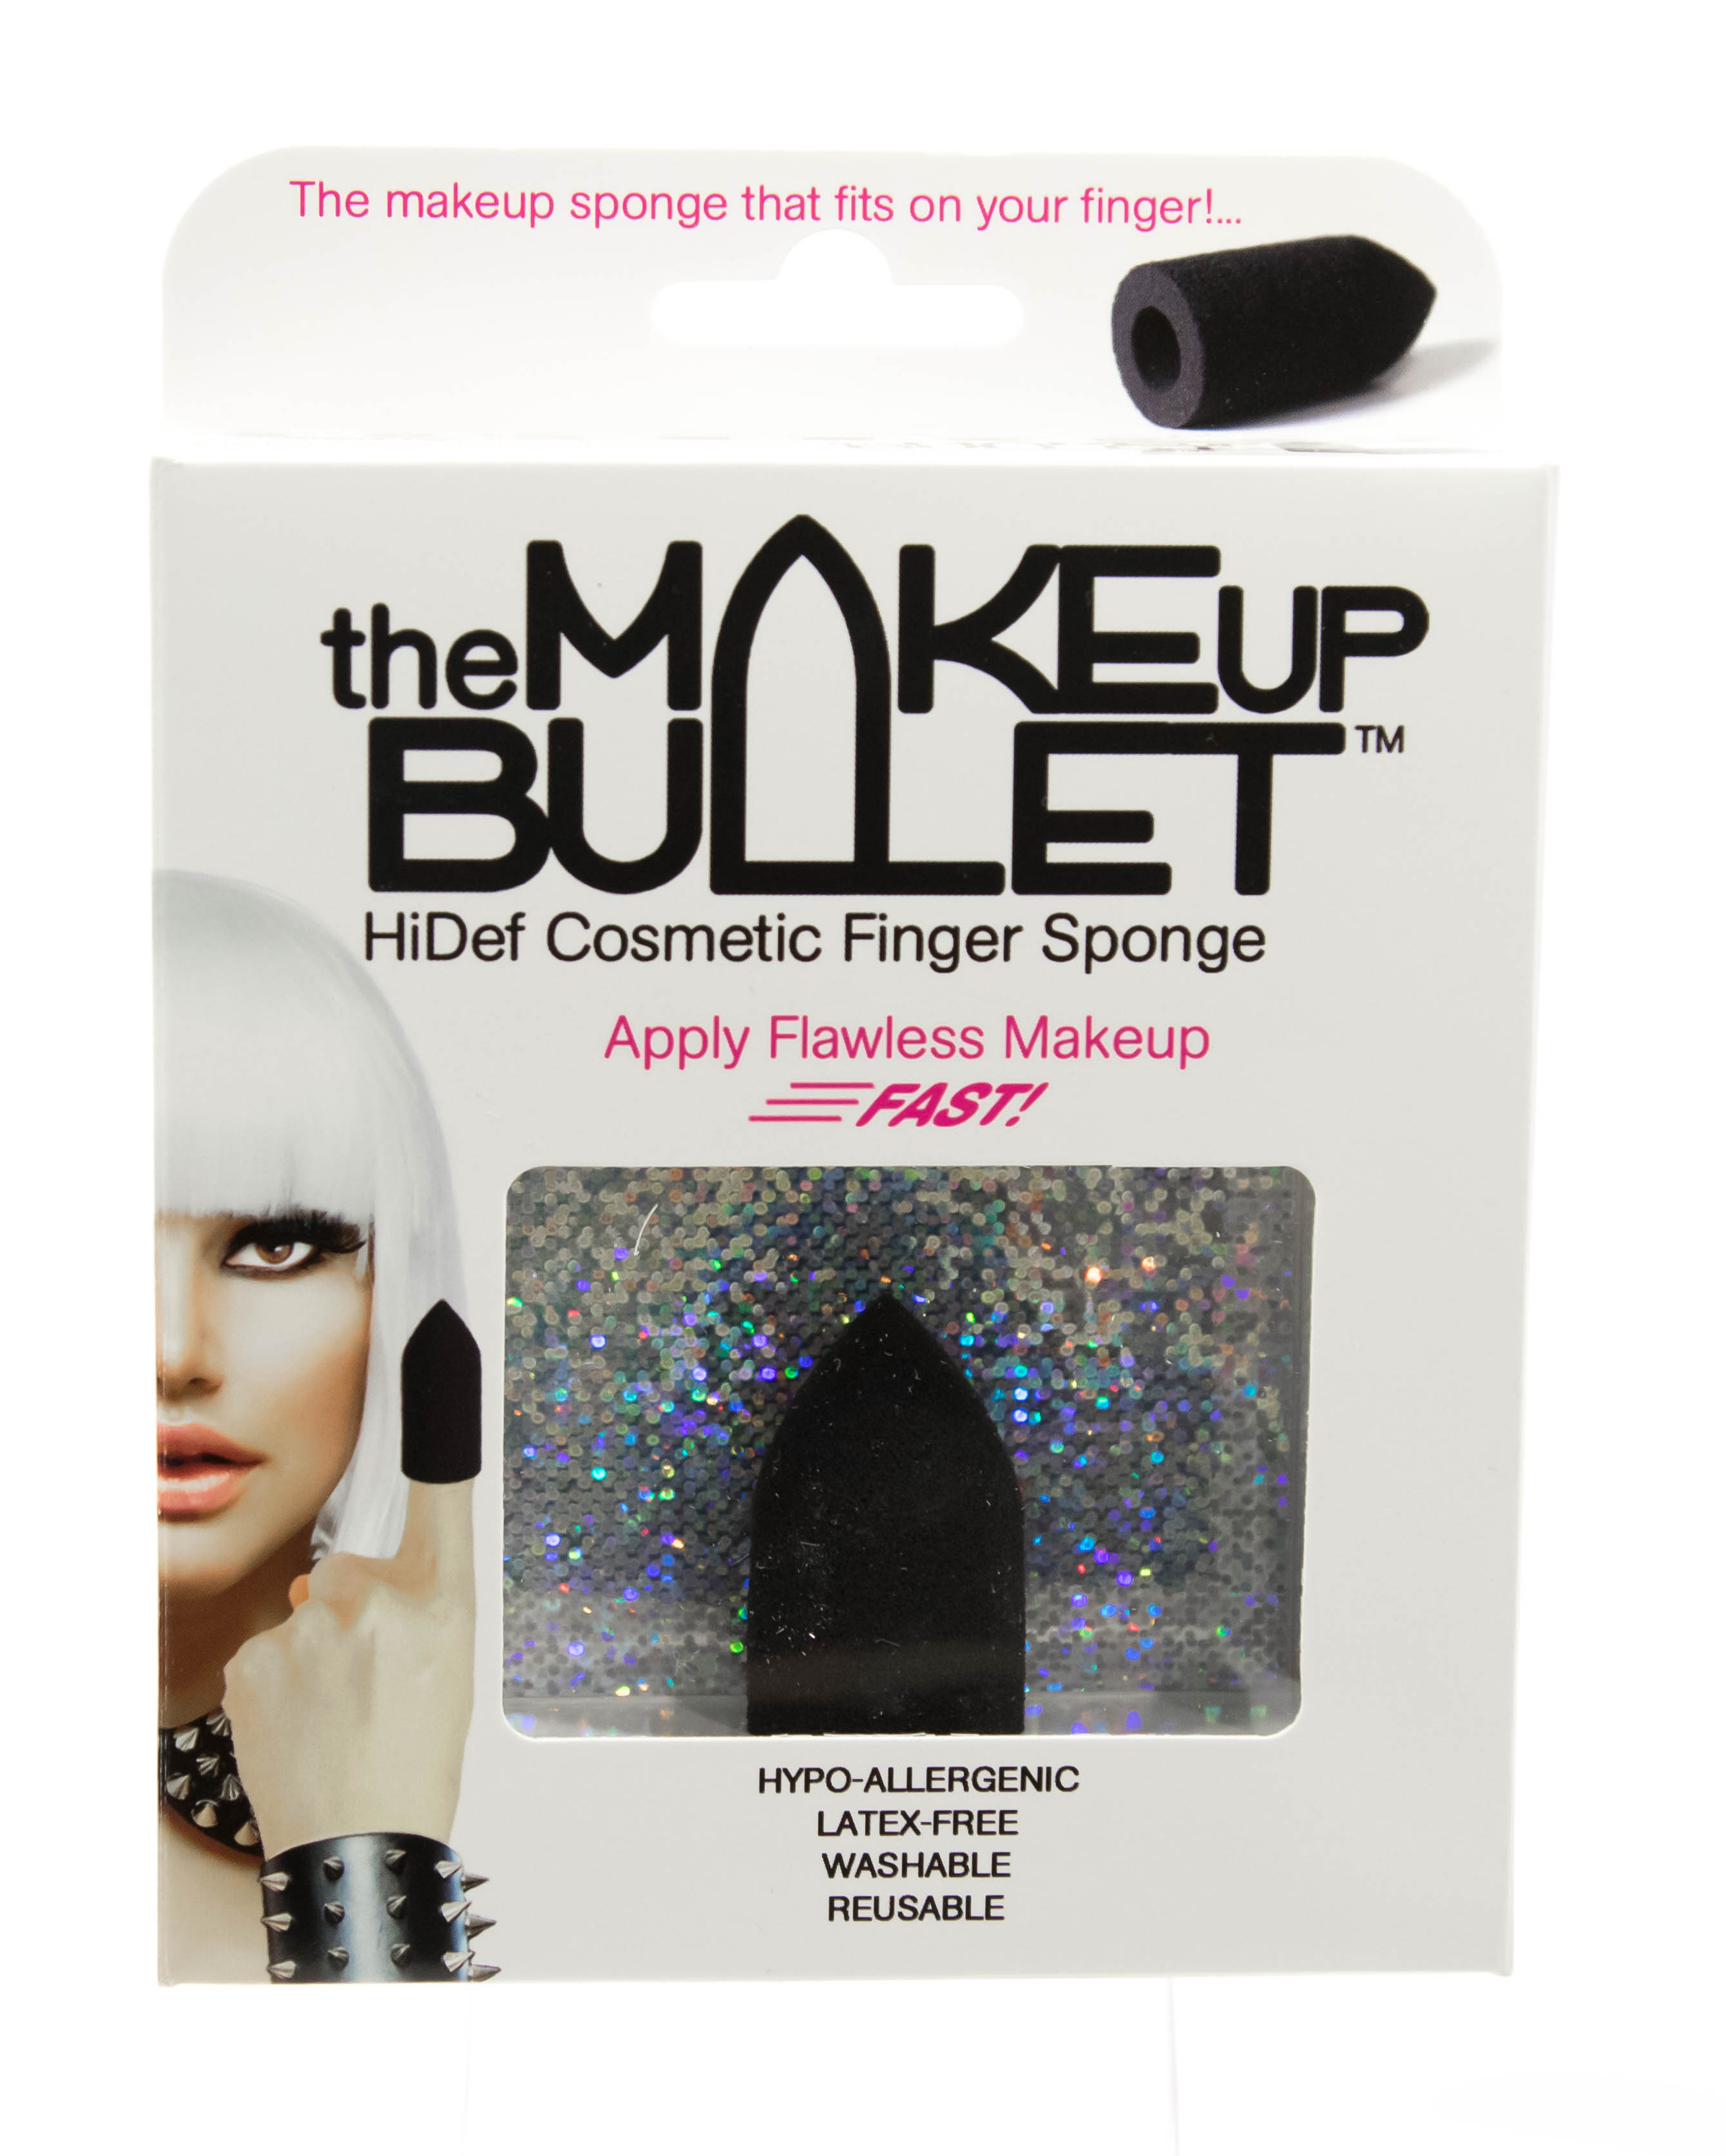 The Makeup Bullet Косметический спонж, 1 шт (The Makeup Bullet, Sponge)